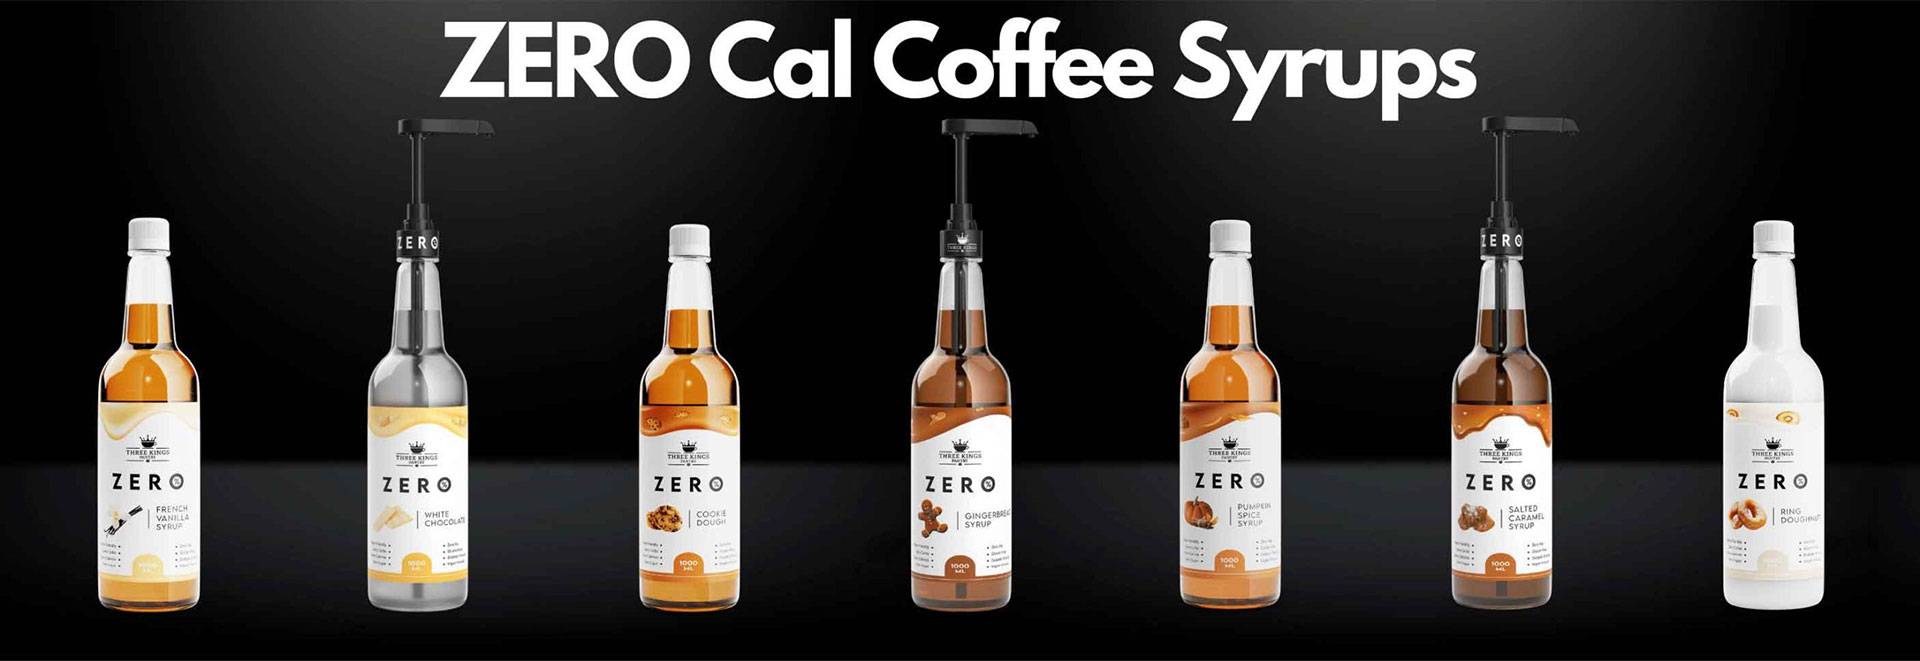 zero calorie coffee syrups